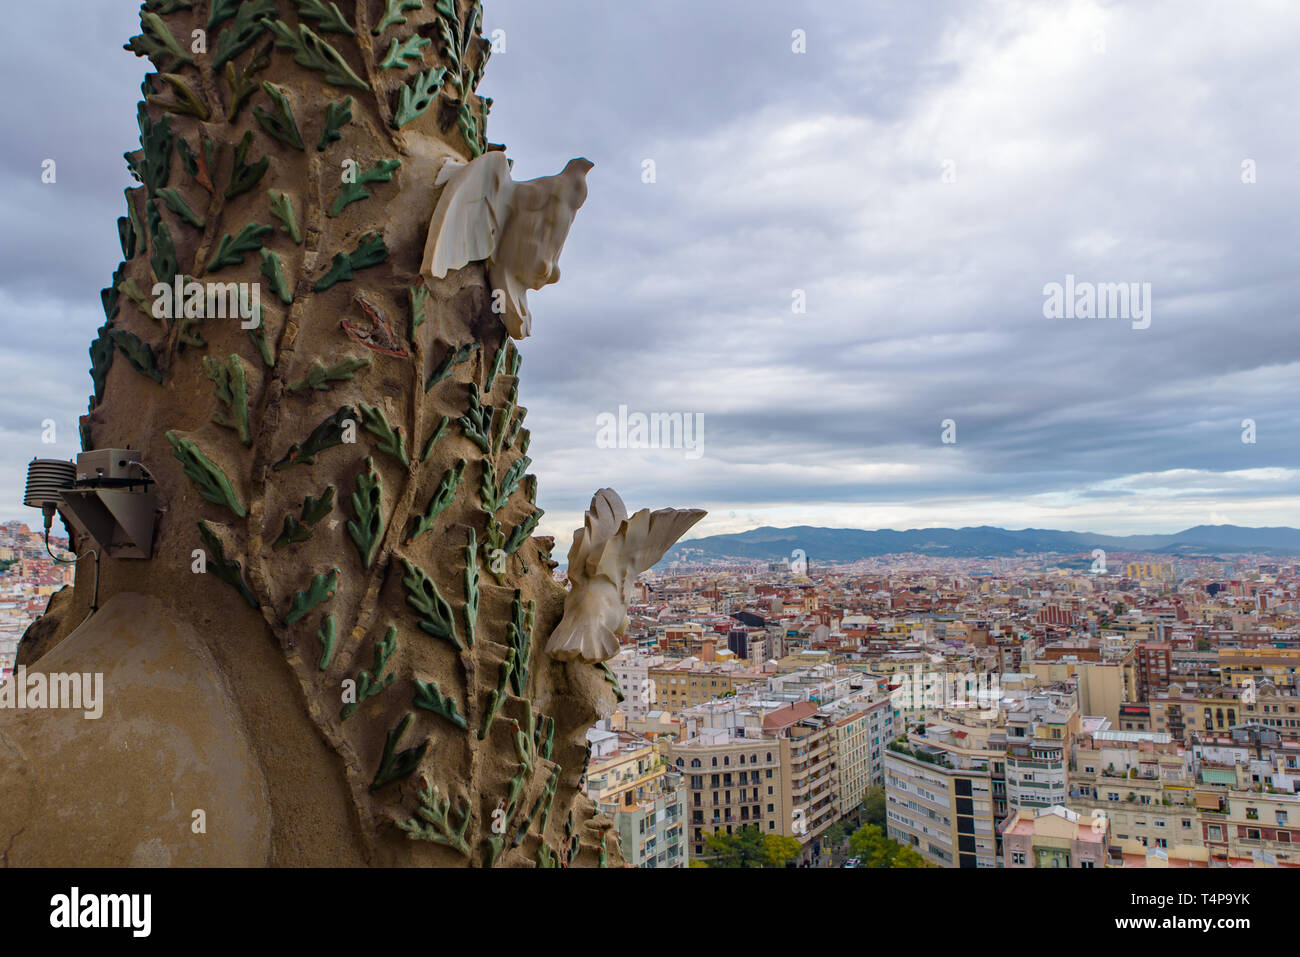 Artworks de la Façade de la Nativité de la Sagrada Familia à Barcelone, Espagne Banque D'Images